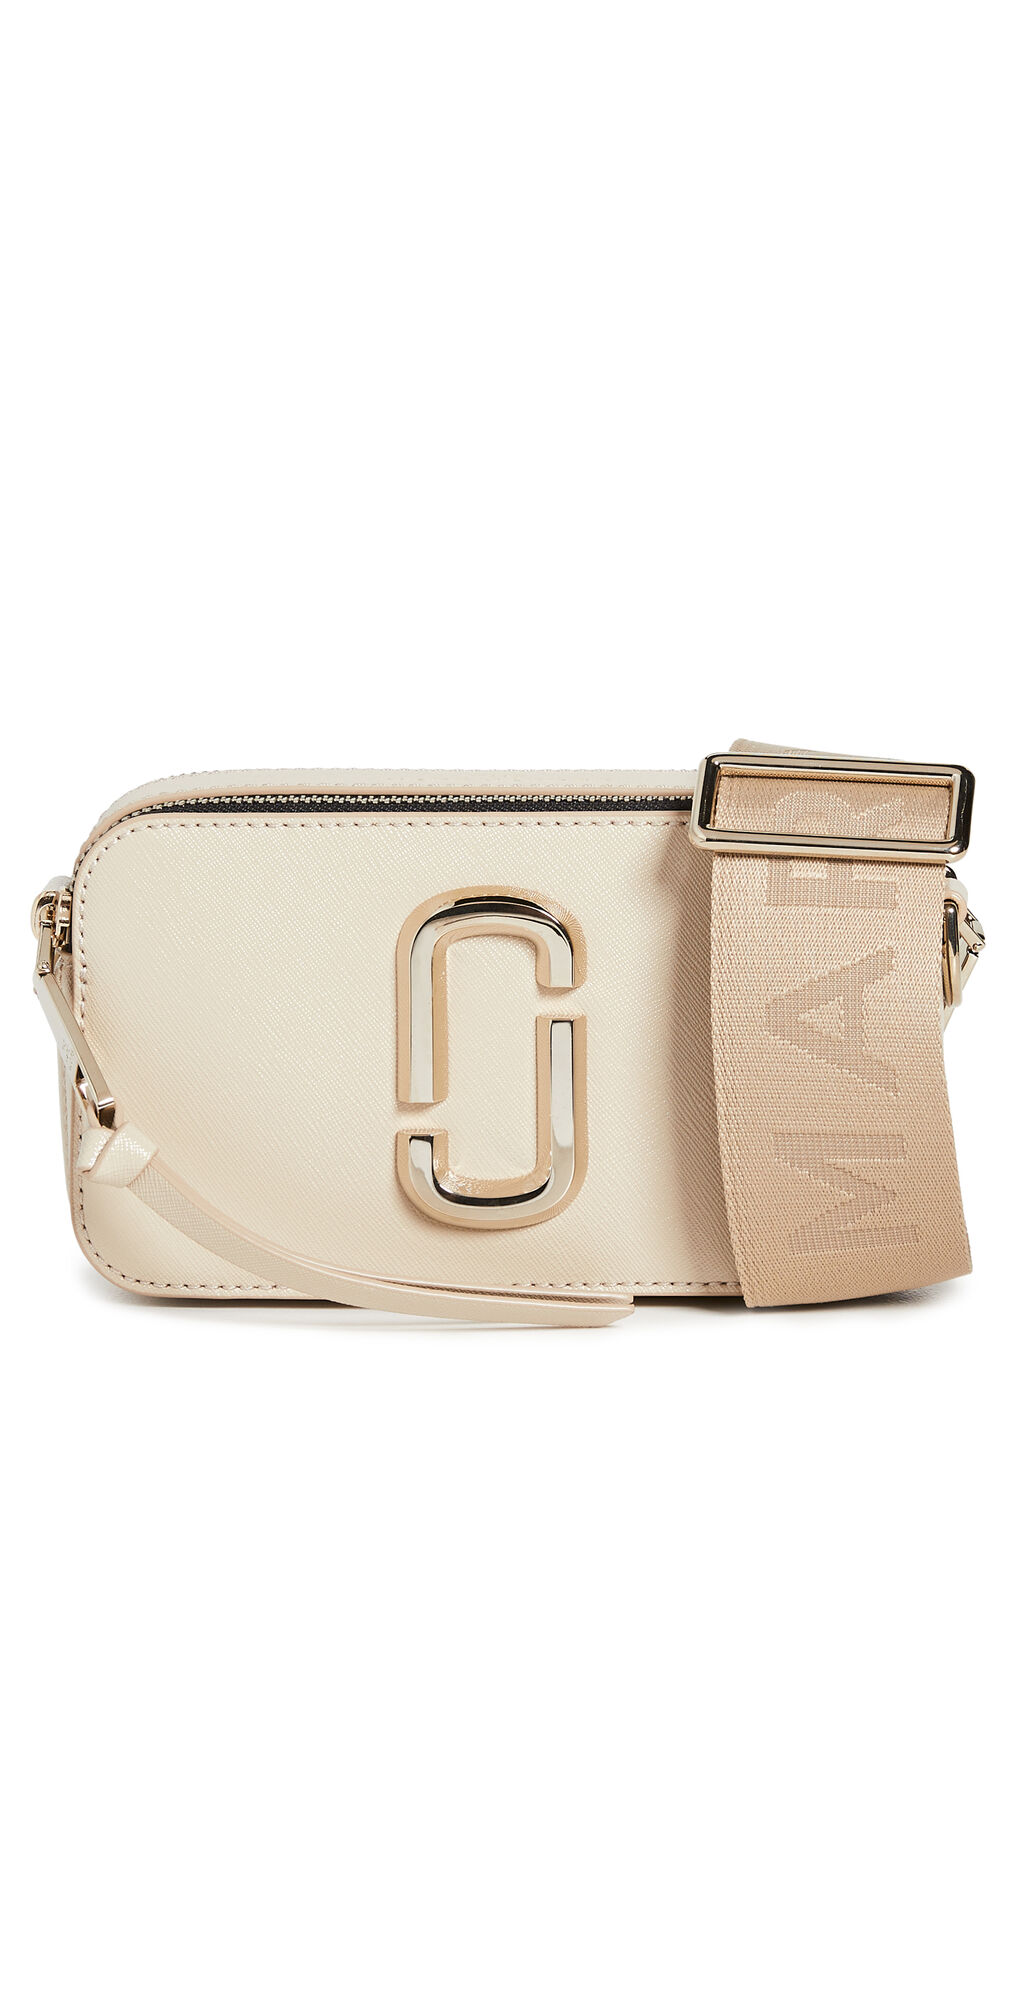 The Marc Jacobs Snapshot DTM Camera Bag Khaki One Size  Khaki  size:One Size